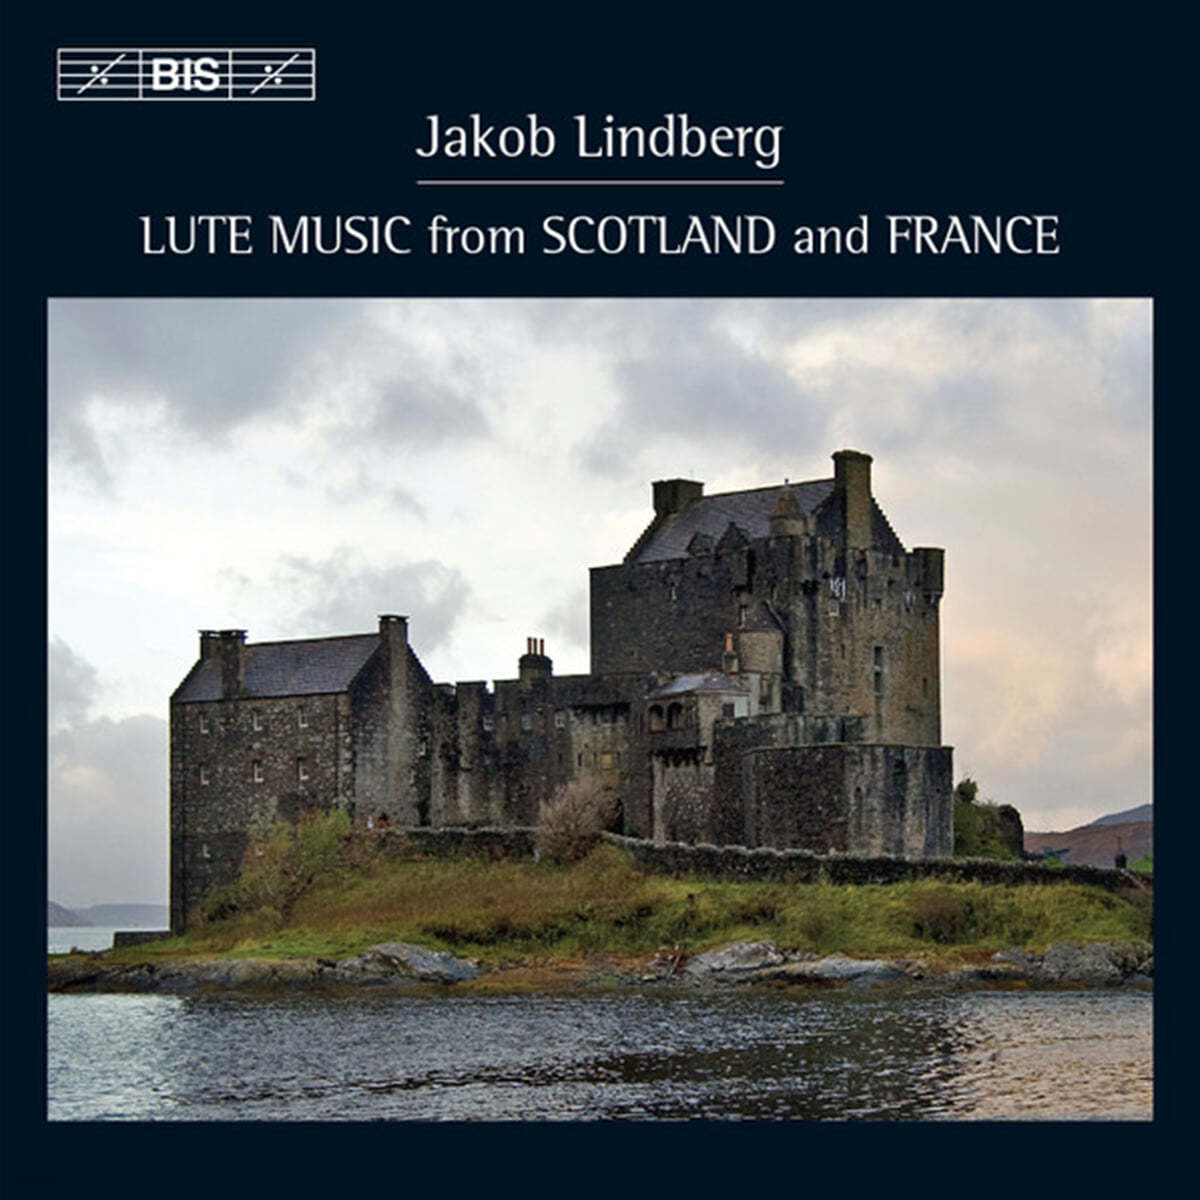 Jakob Lindberg 스코틀랜드, 프랑스 류트 음악 (Scotland, France Lute Music)